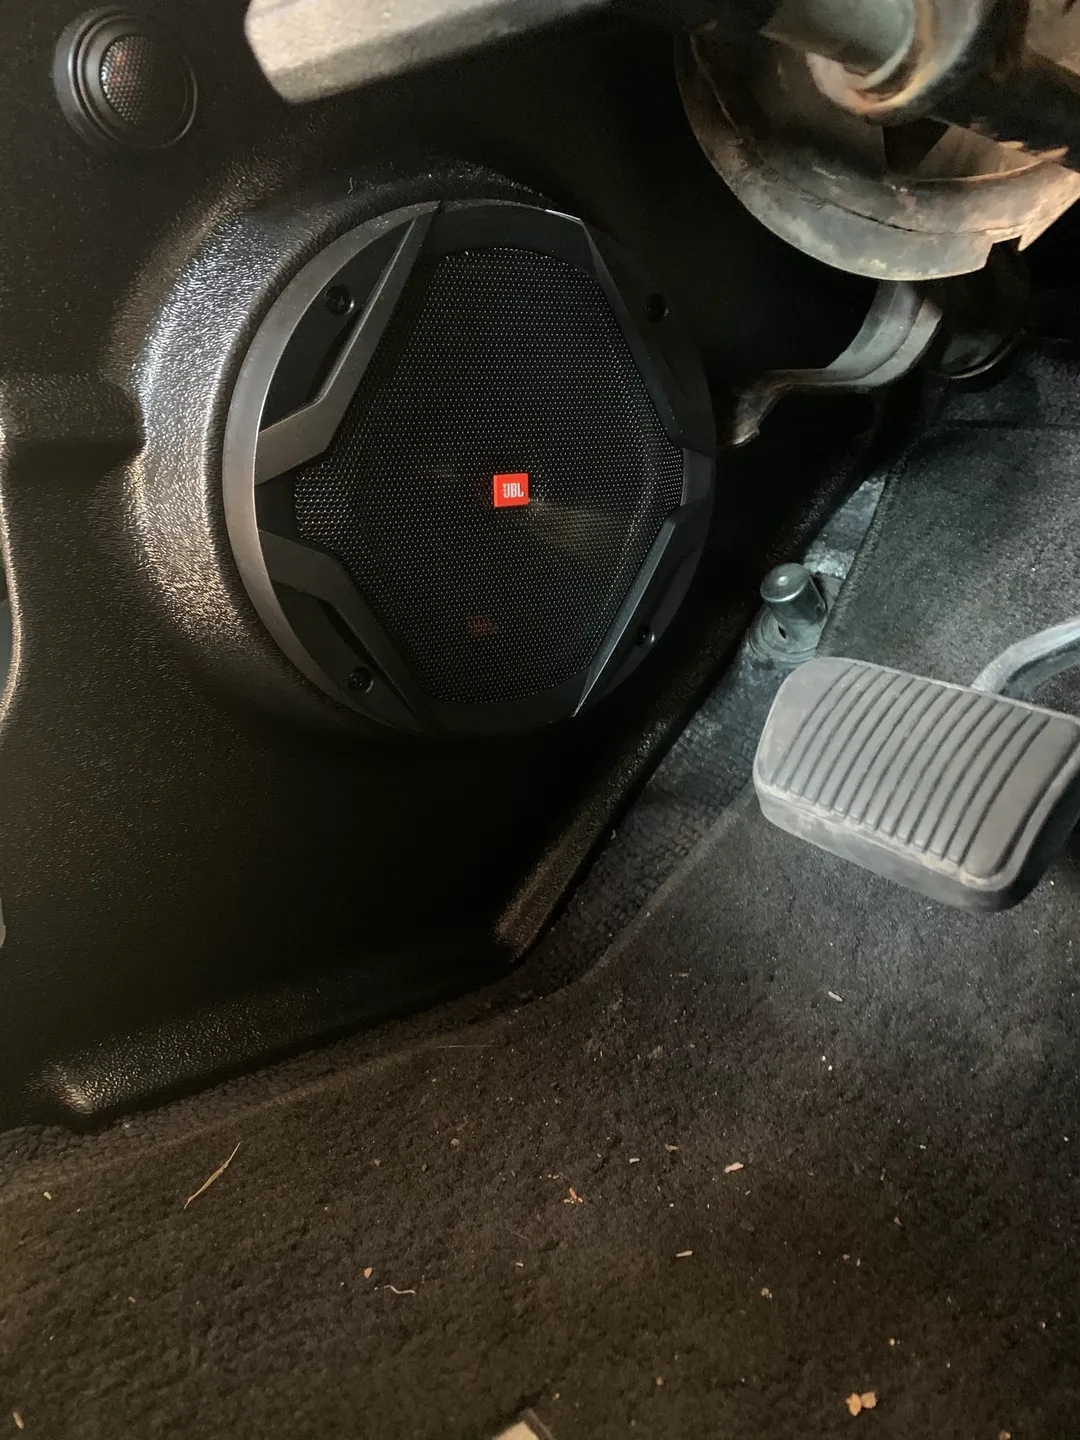 A JBL stereo speaker near the car chair